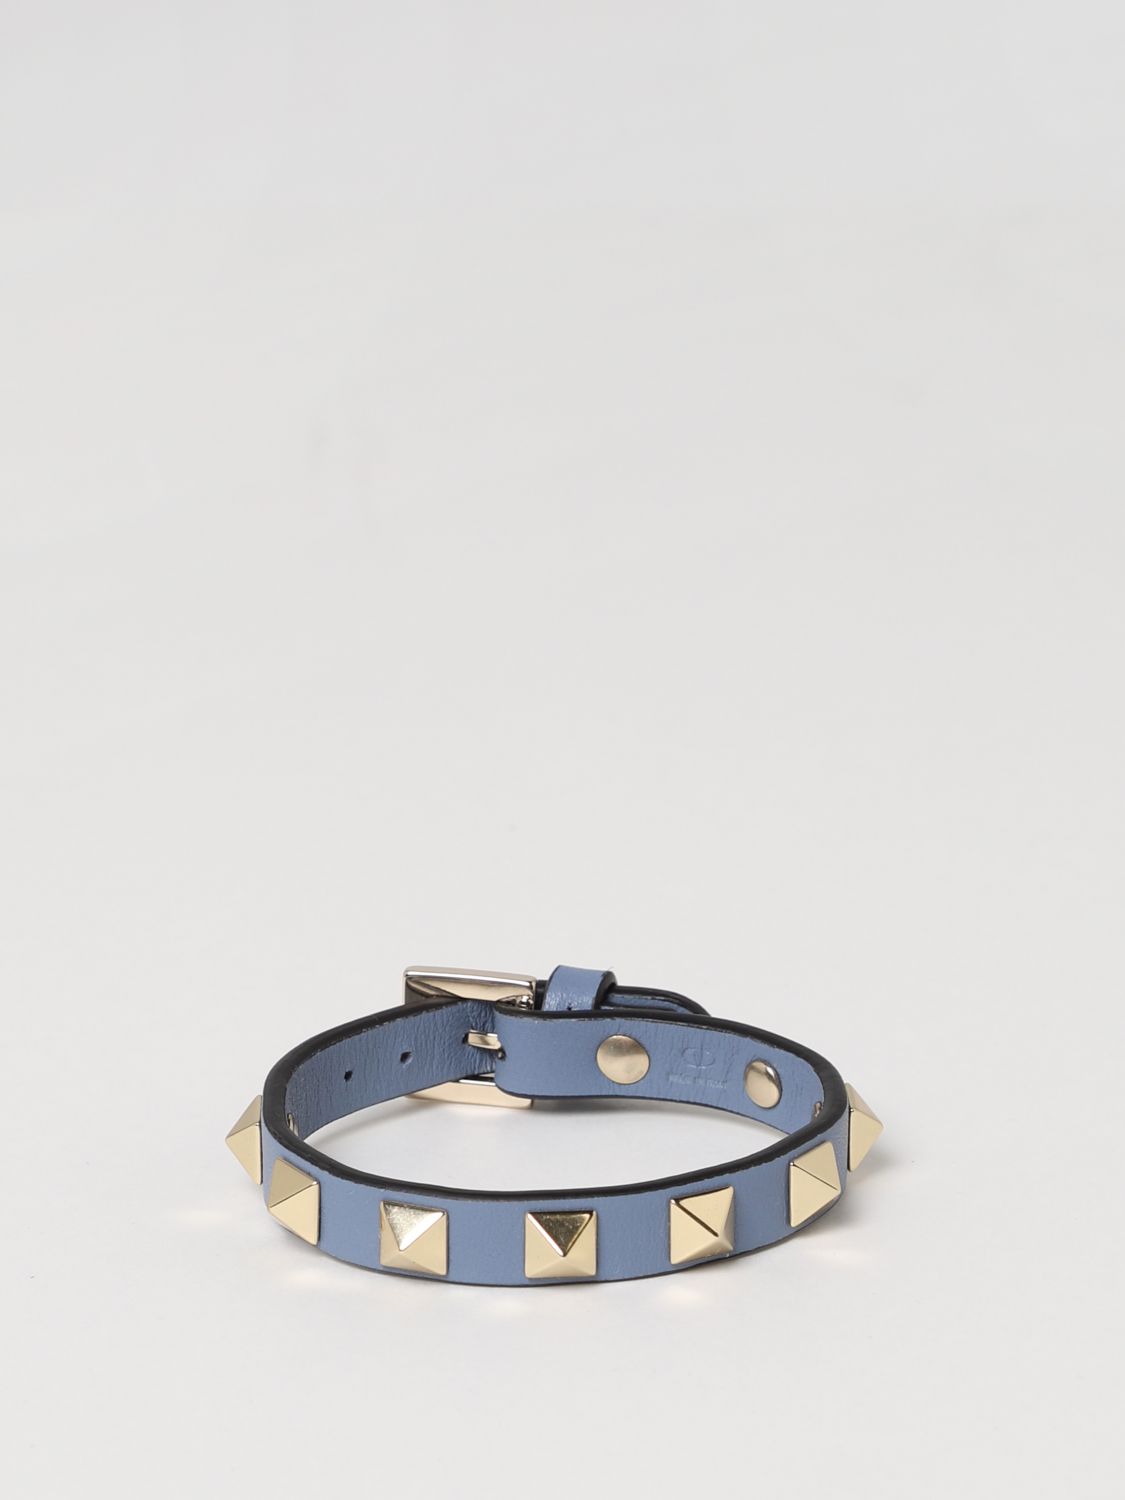 VALENTINO GARAVANI: Rockstud leather bracelet - Blue | Valentino Garavani 1W2J0255VIT online at GIGLIO.COM